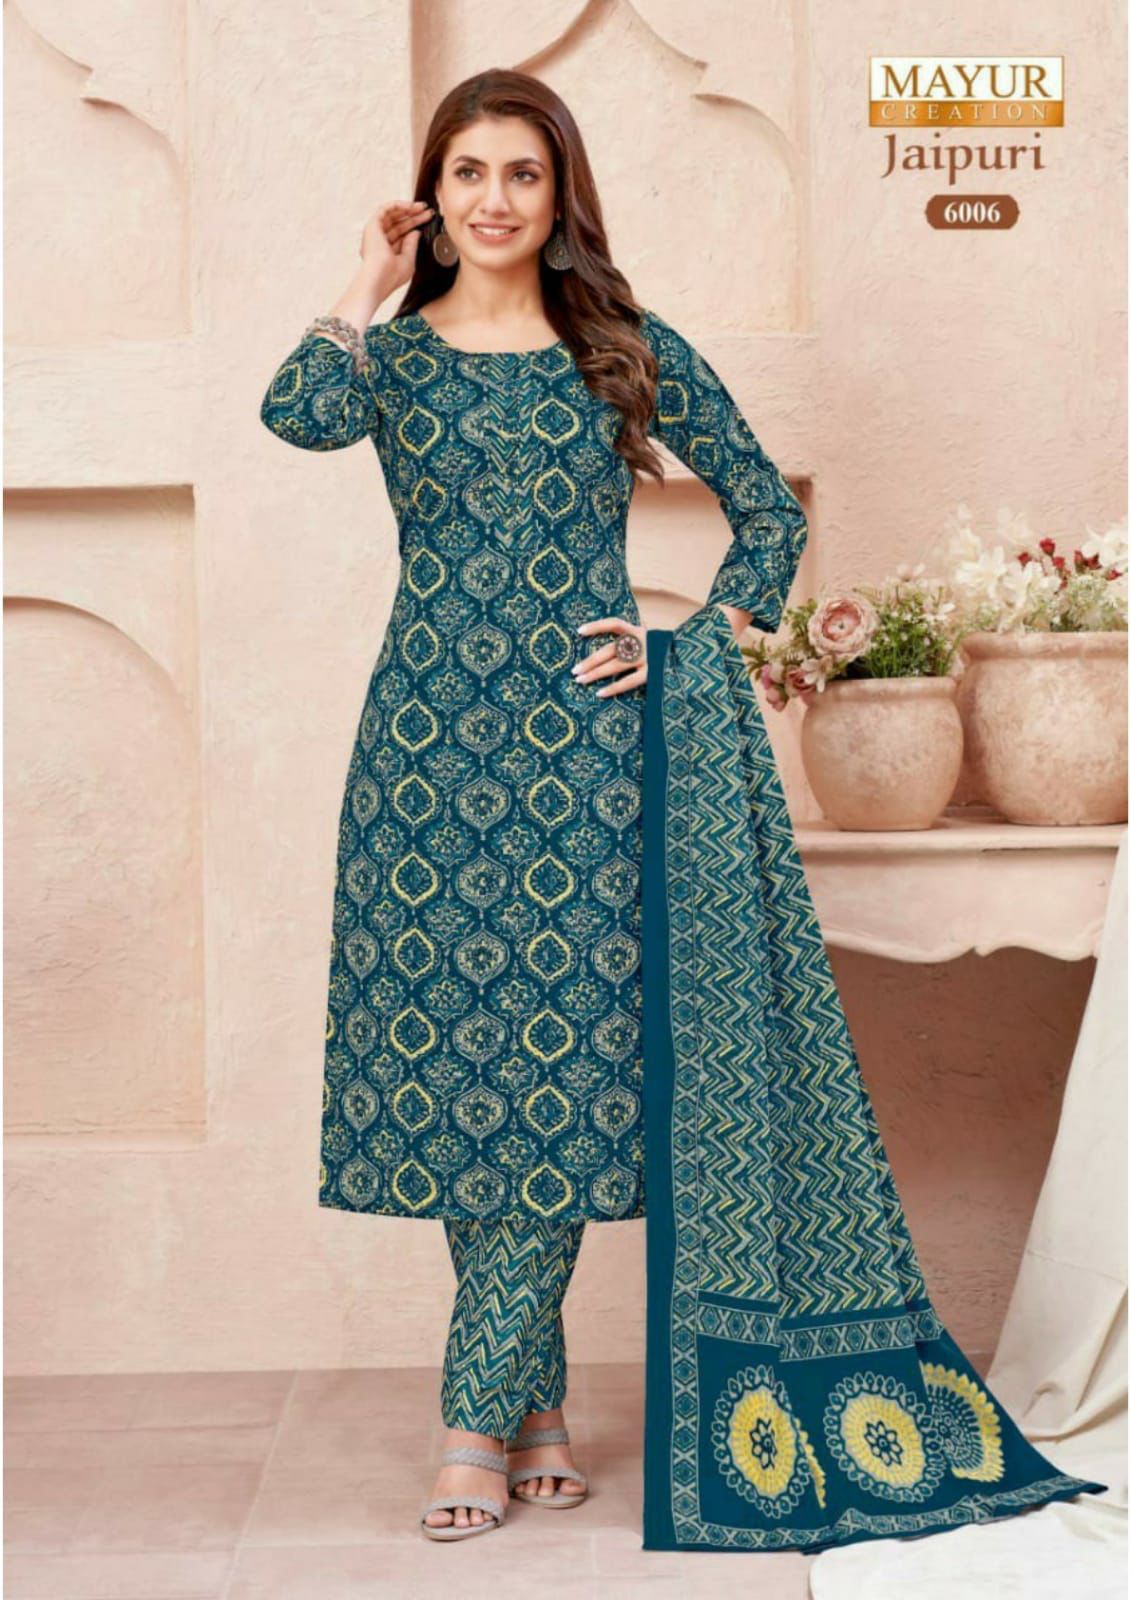 Mayur Creation Jaipuri Vol 6 Cotton Printed Dress Material Jetpur - jilaniwholesalesuit